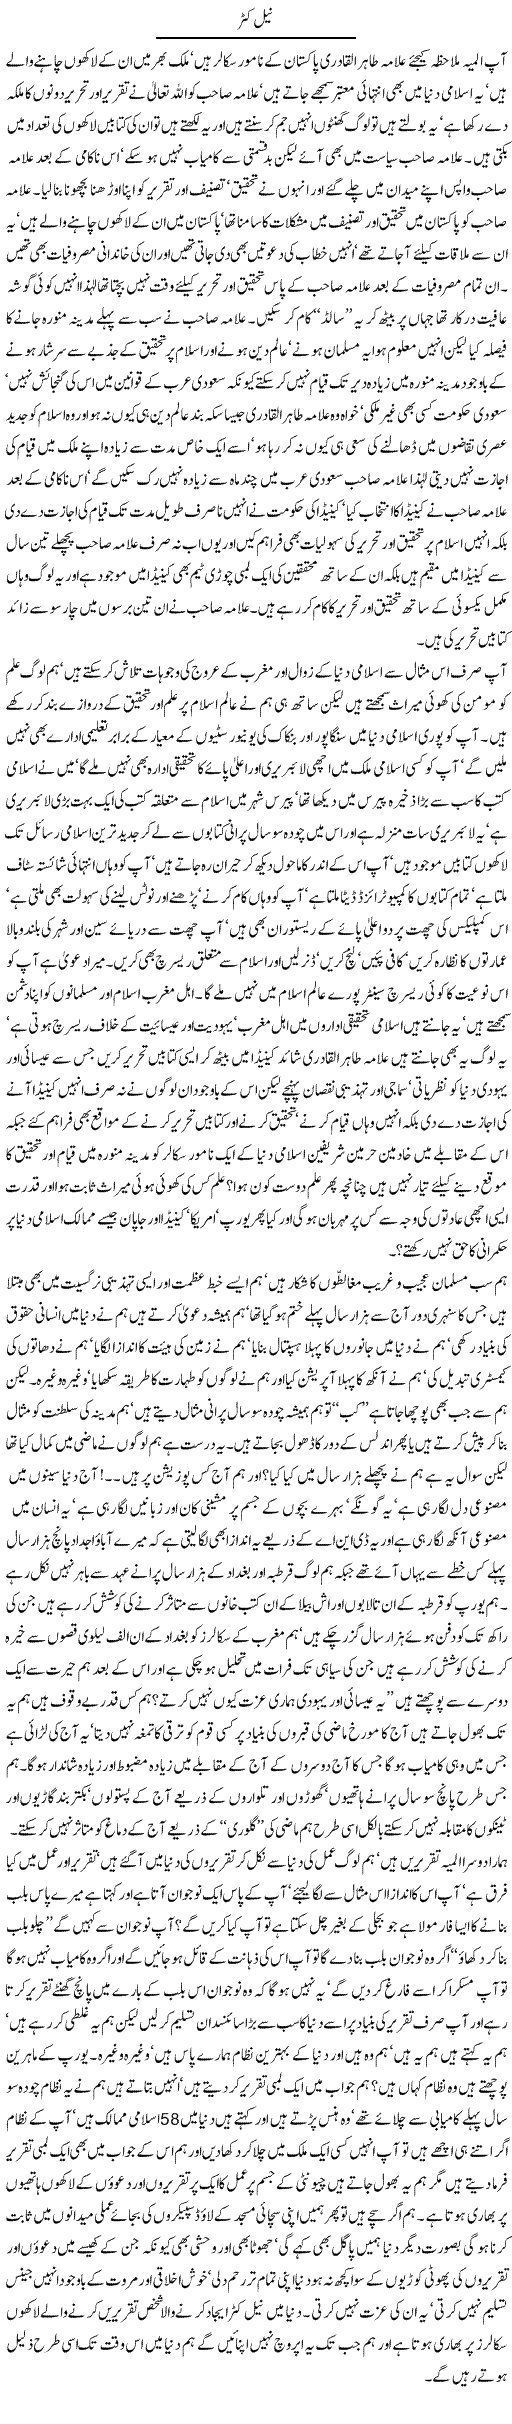 Tahir Qadri Express Column Javed Chaudhry 6 February 2011